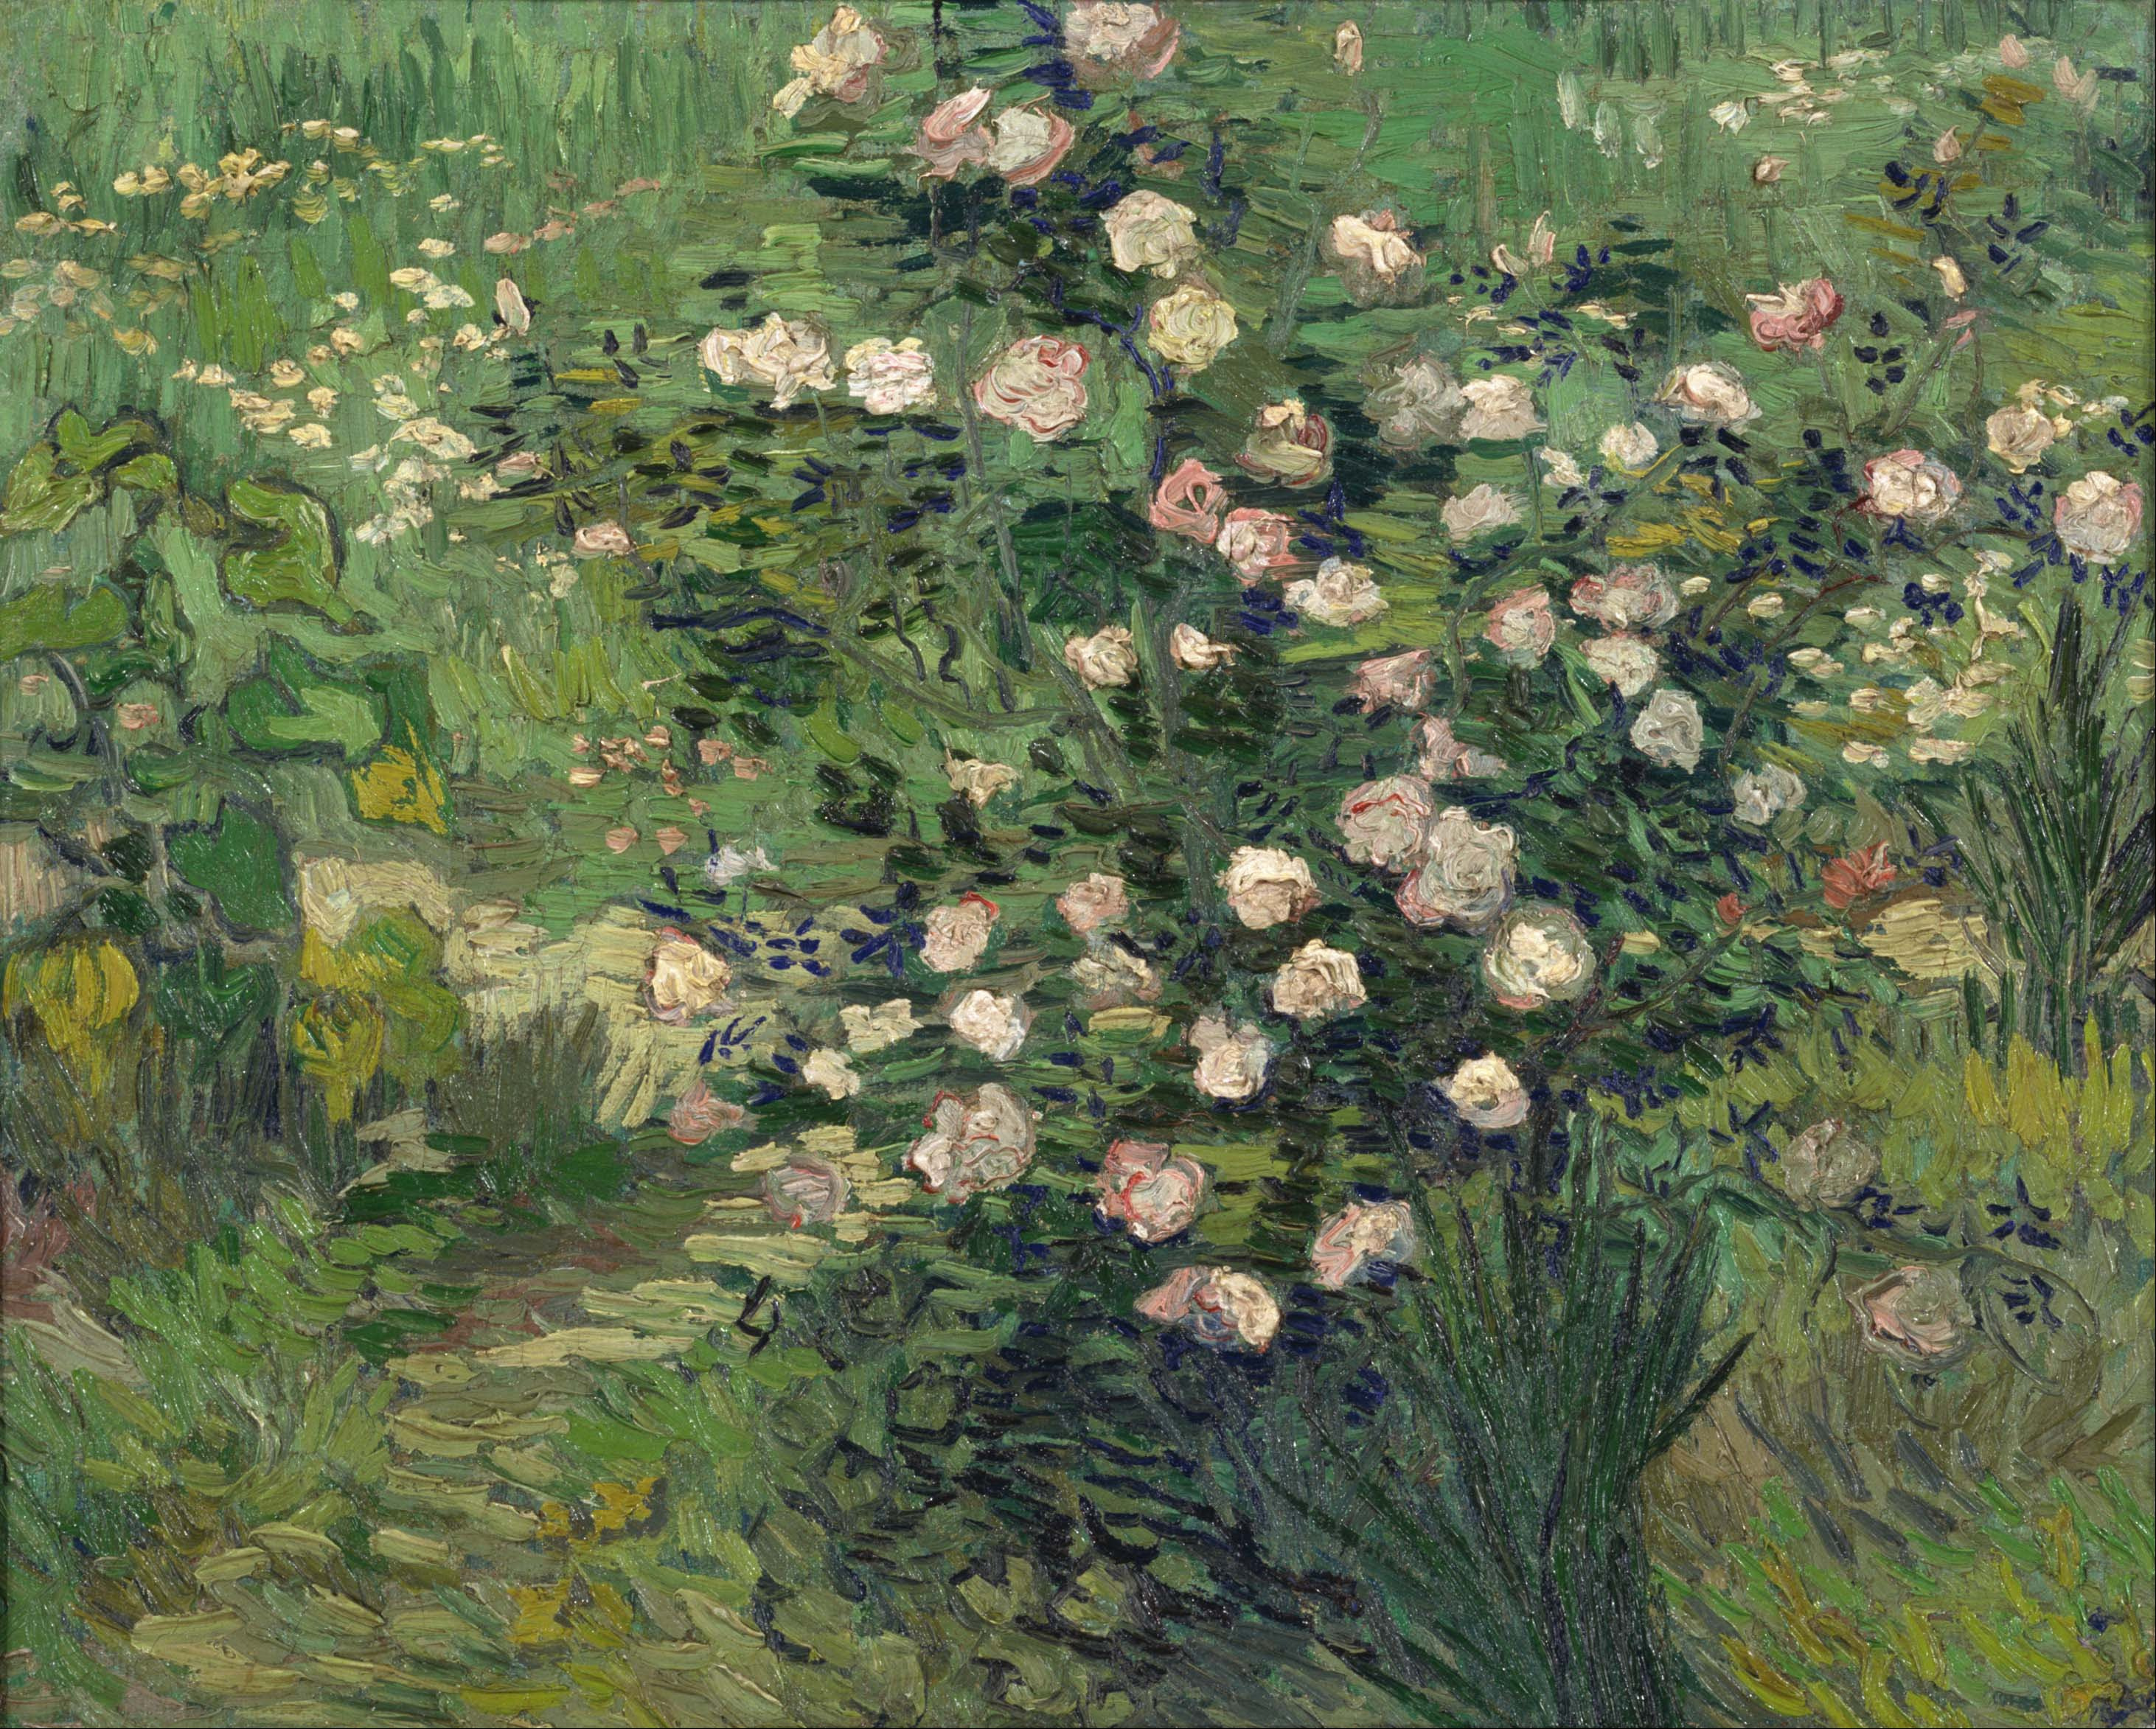 Trandafiri  by Vincent van Gogh - 1889 - 41.3 x 33.0 cm 